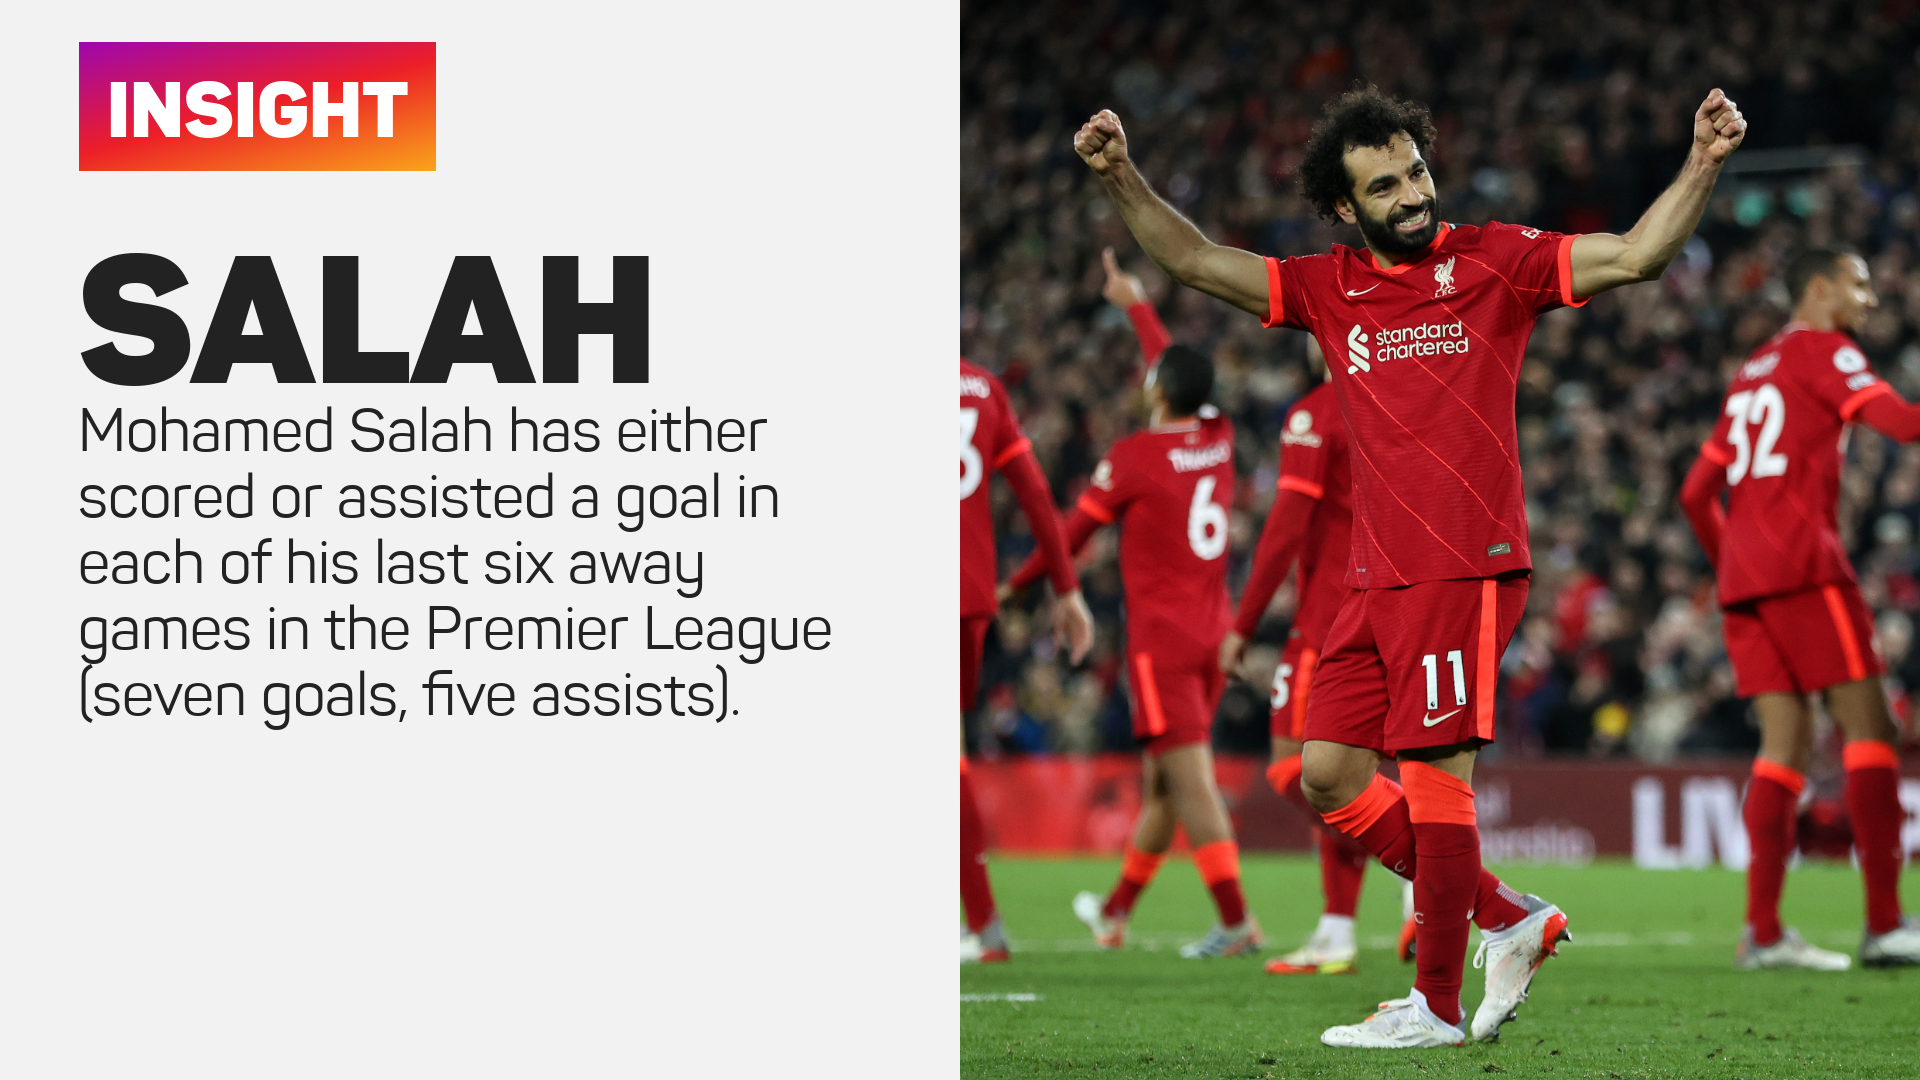 Mohamed Salah has been sensational this season